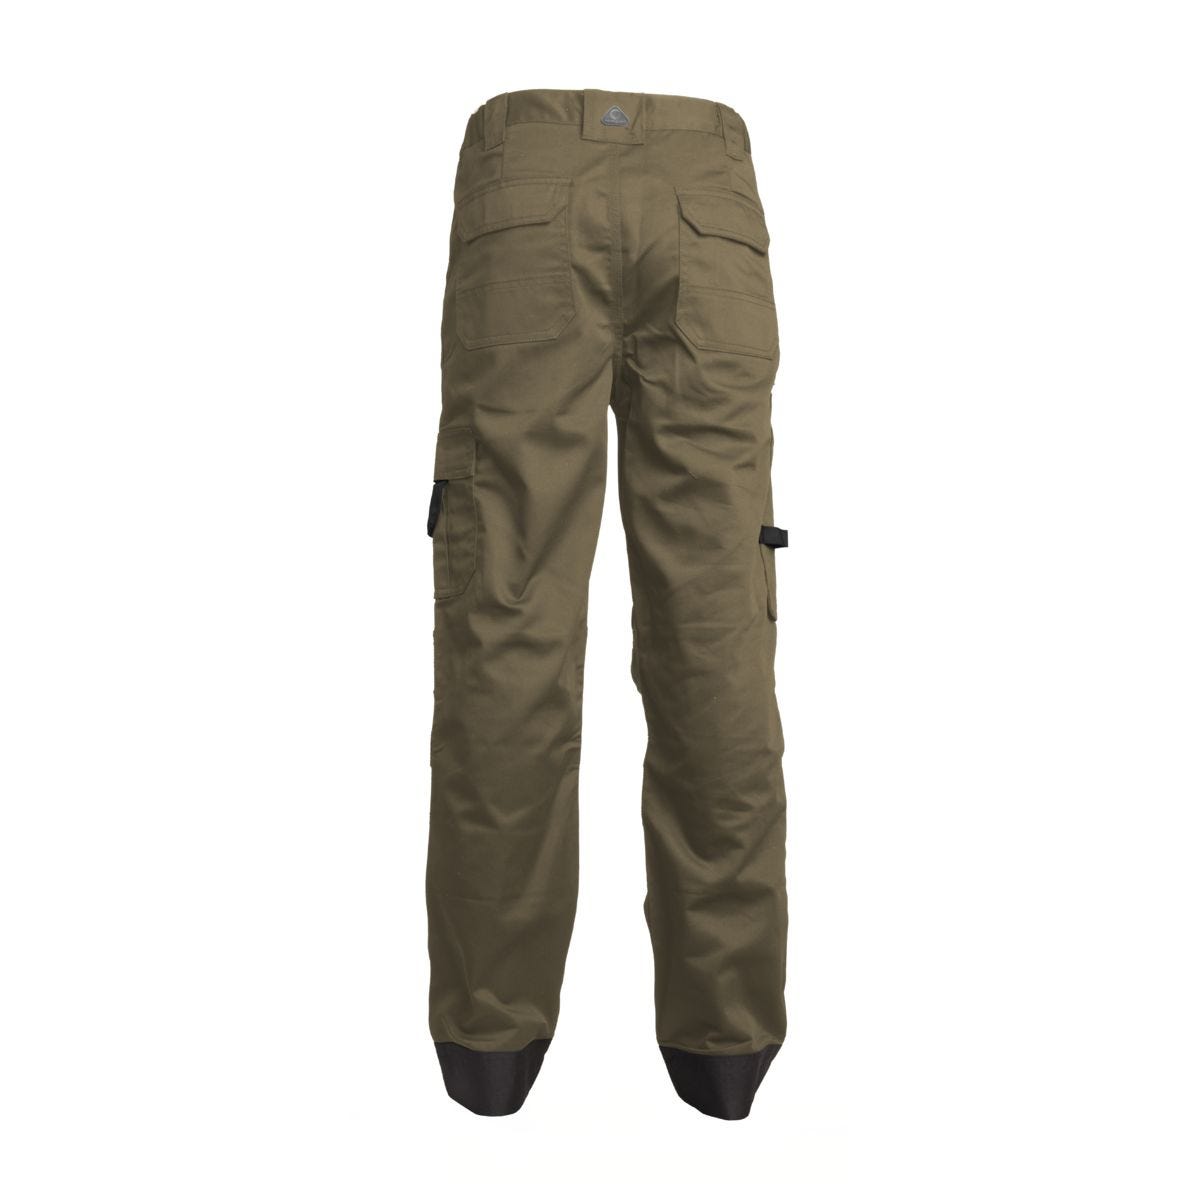 Pantalon CLASS beige - COVERGUARD - Taille 2XL 1